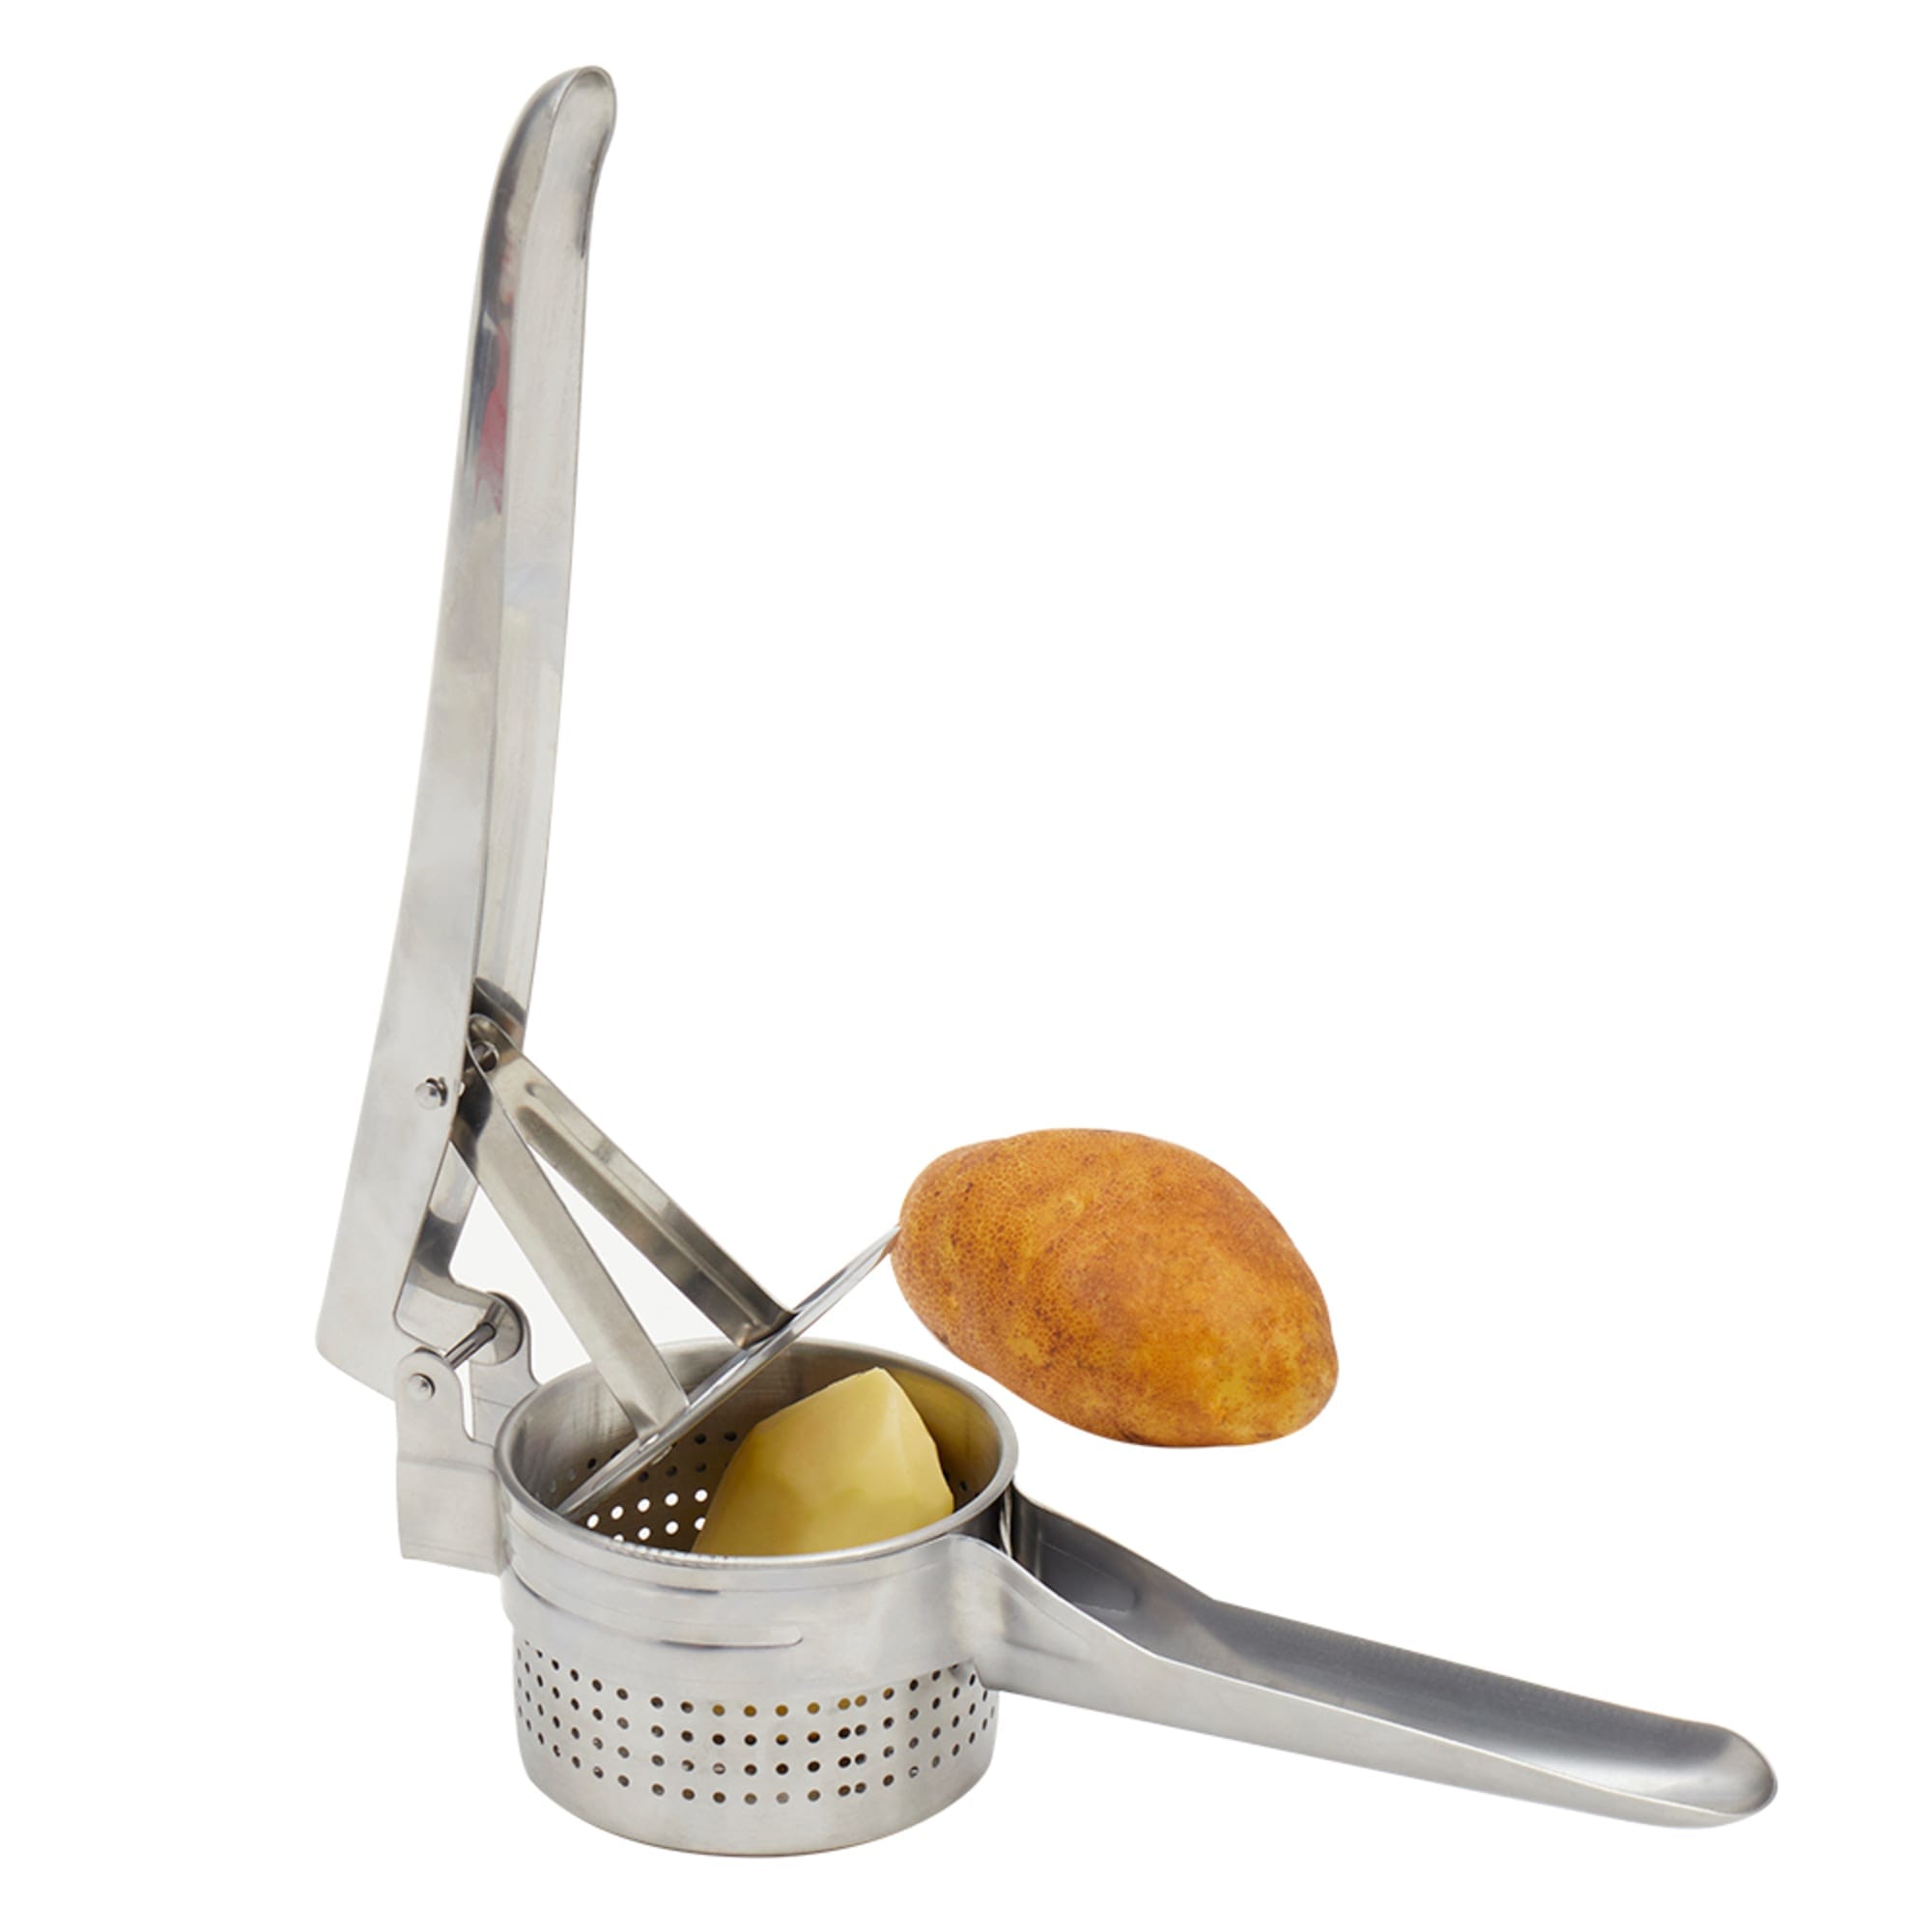 Stainless Steel Potato Masher, Potato Ricer, Kitchen Essentials